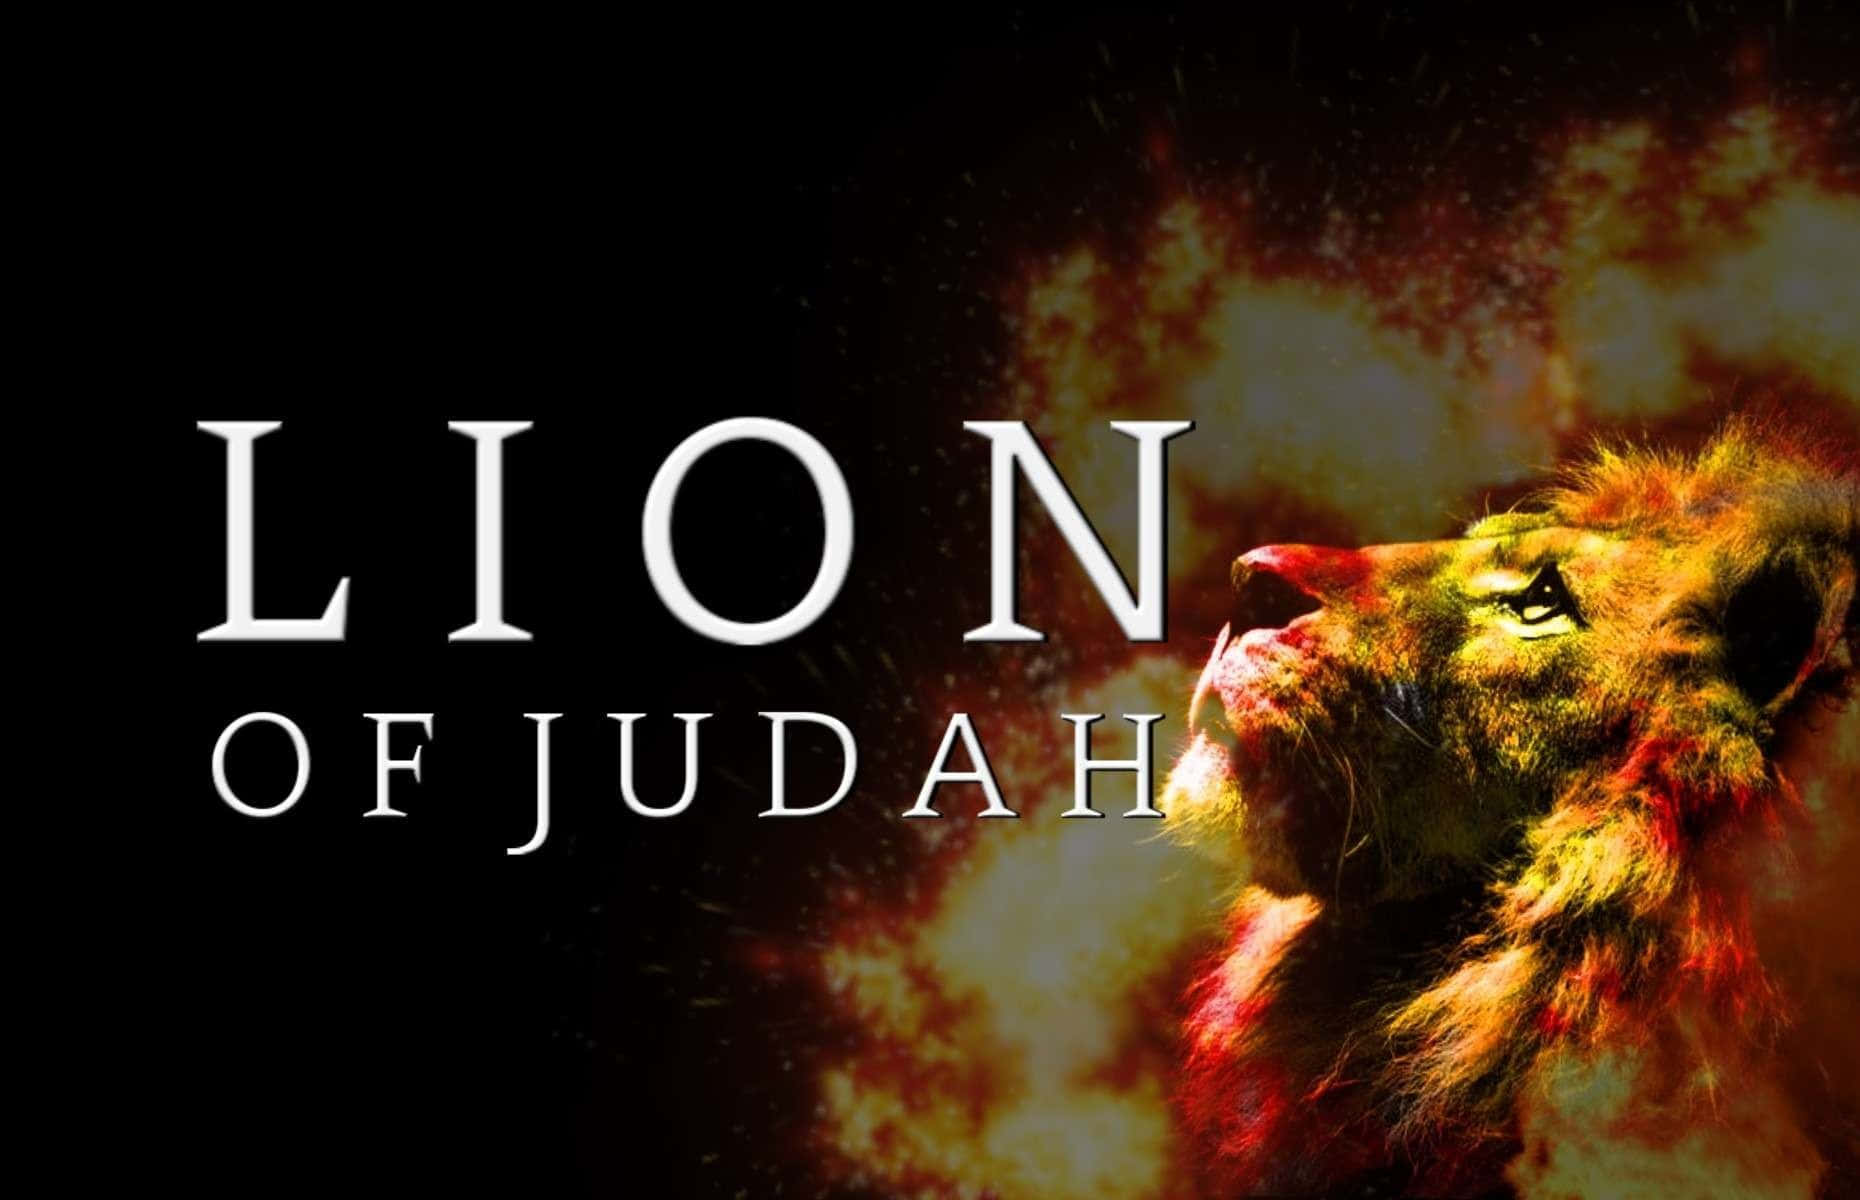 Roar with Pride of the Lion of Judah